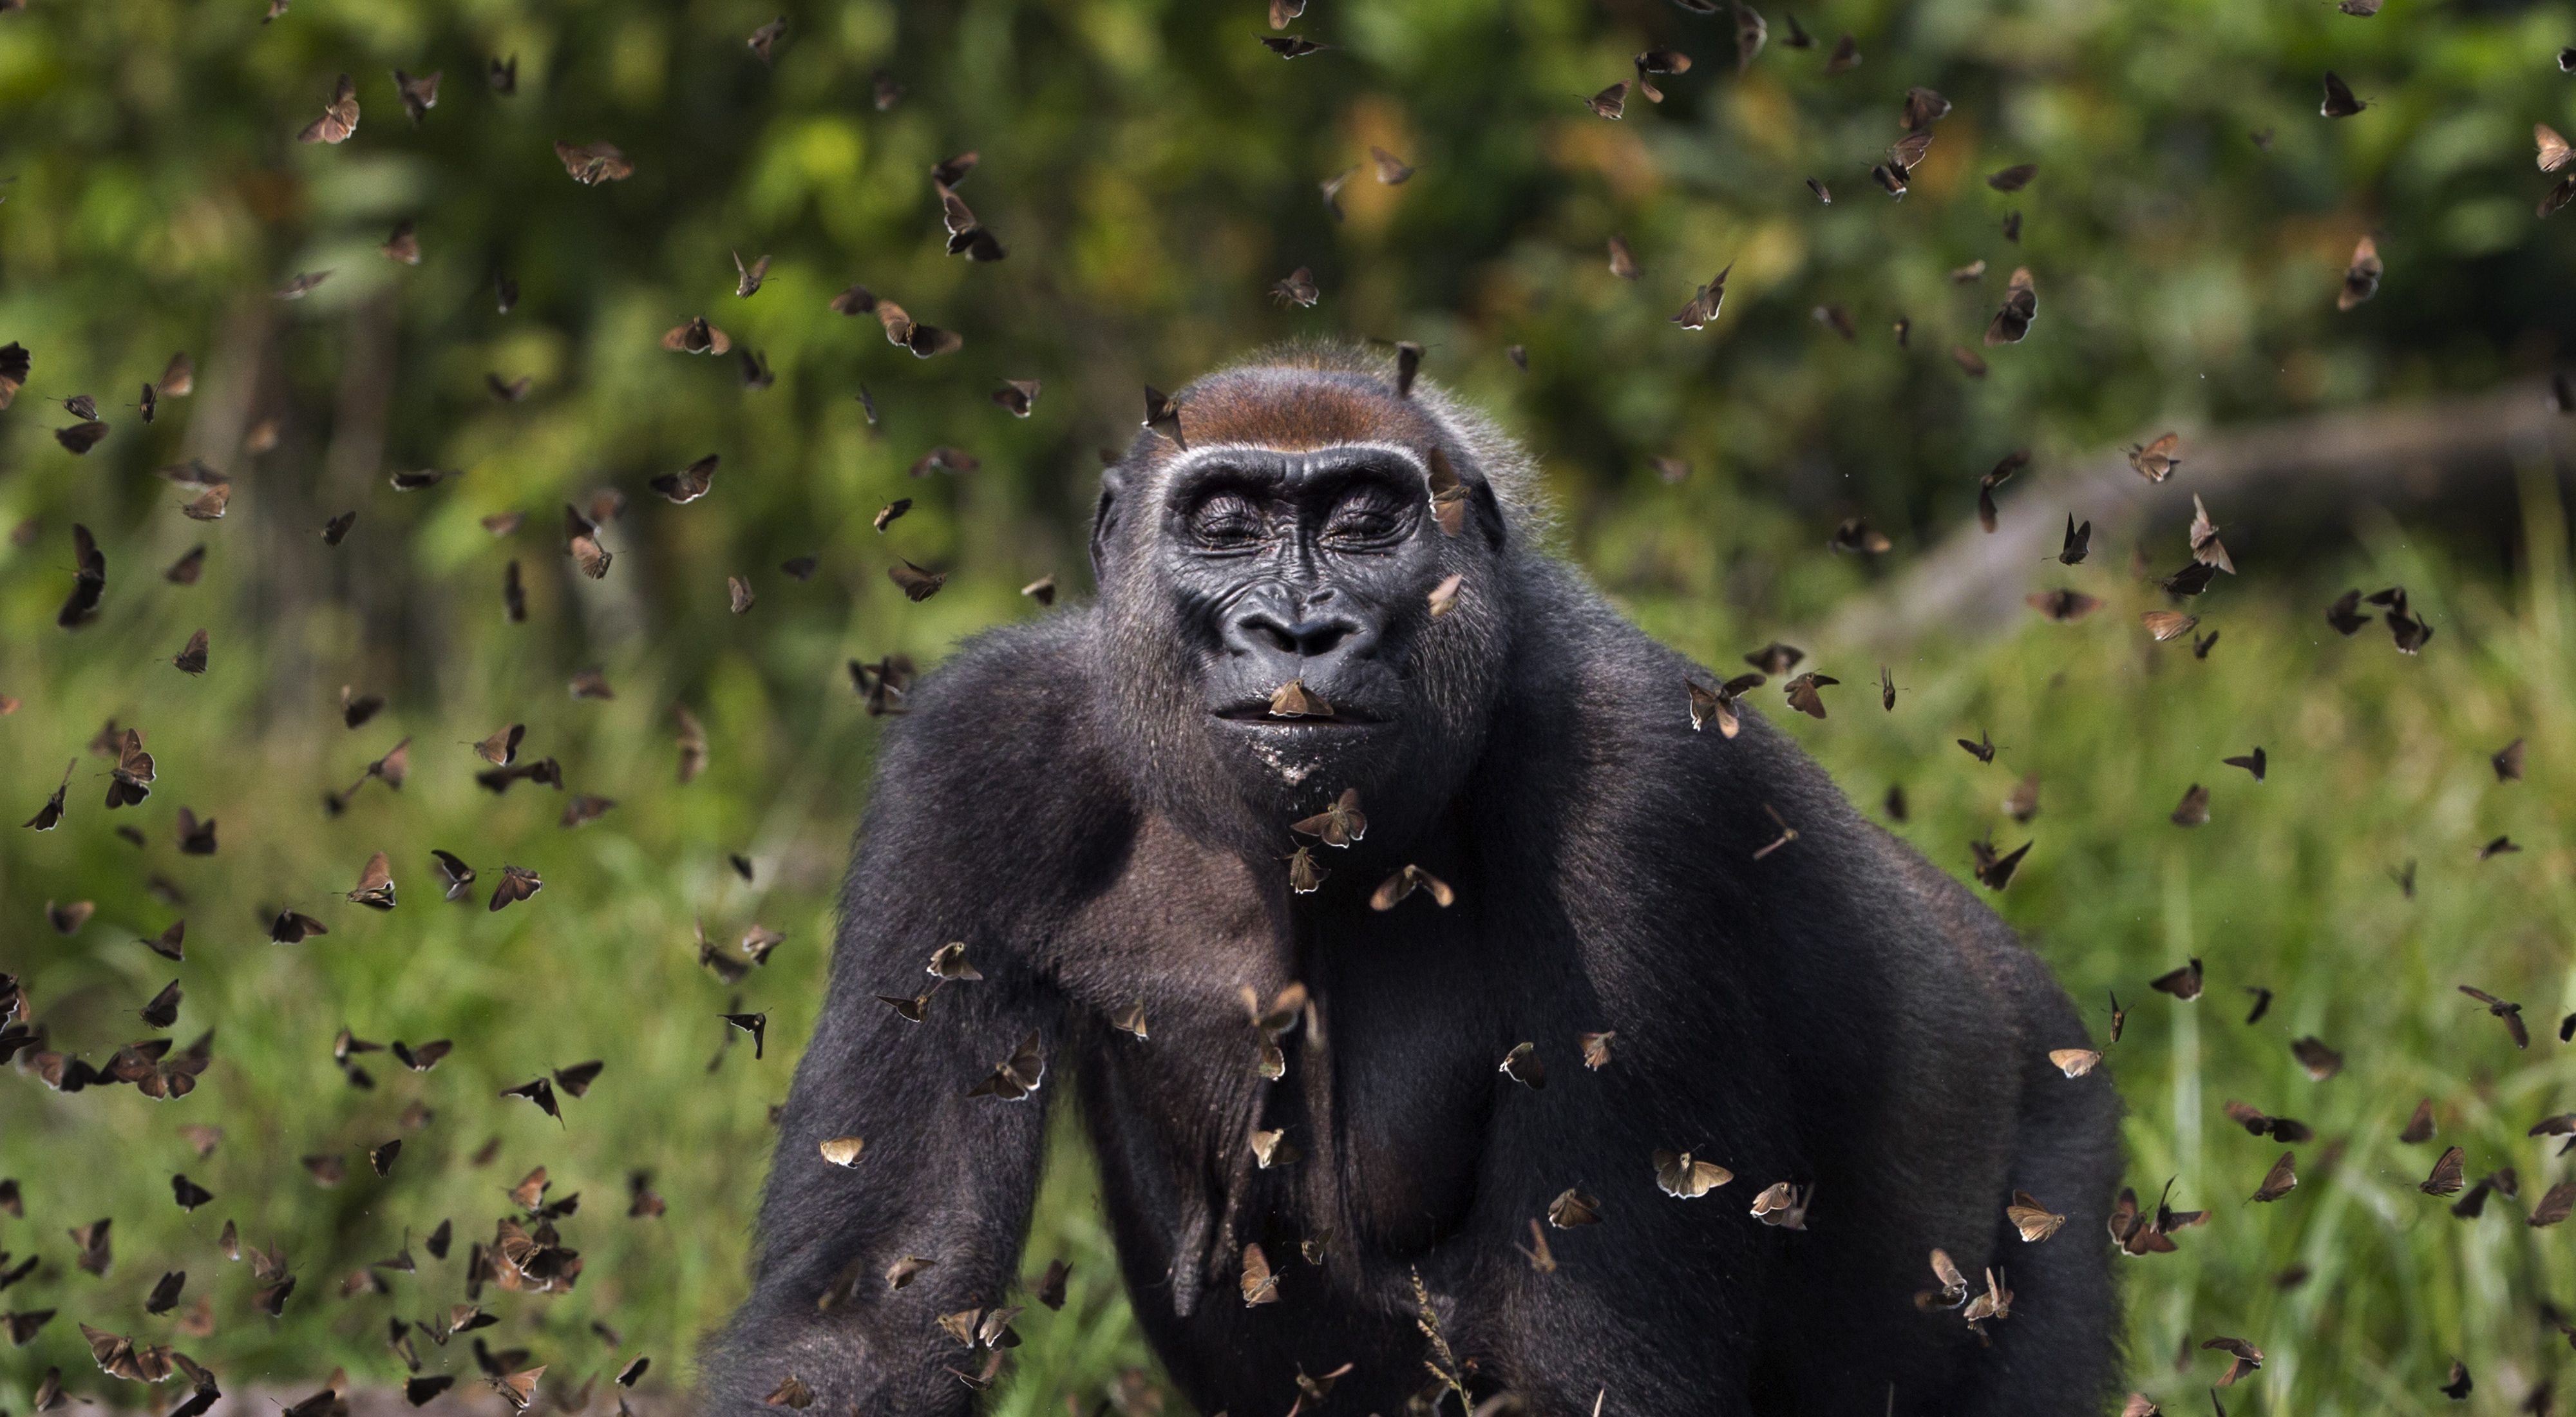 Female gorilla walks through cloud of butterflies in a field.